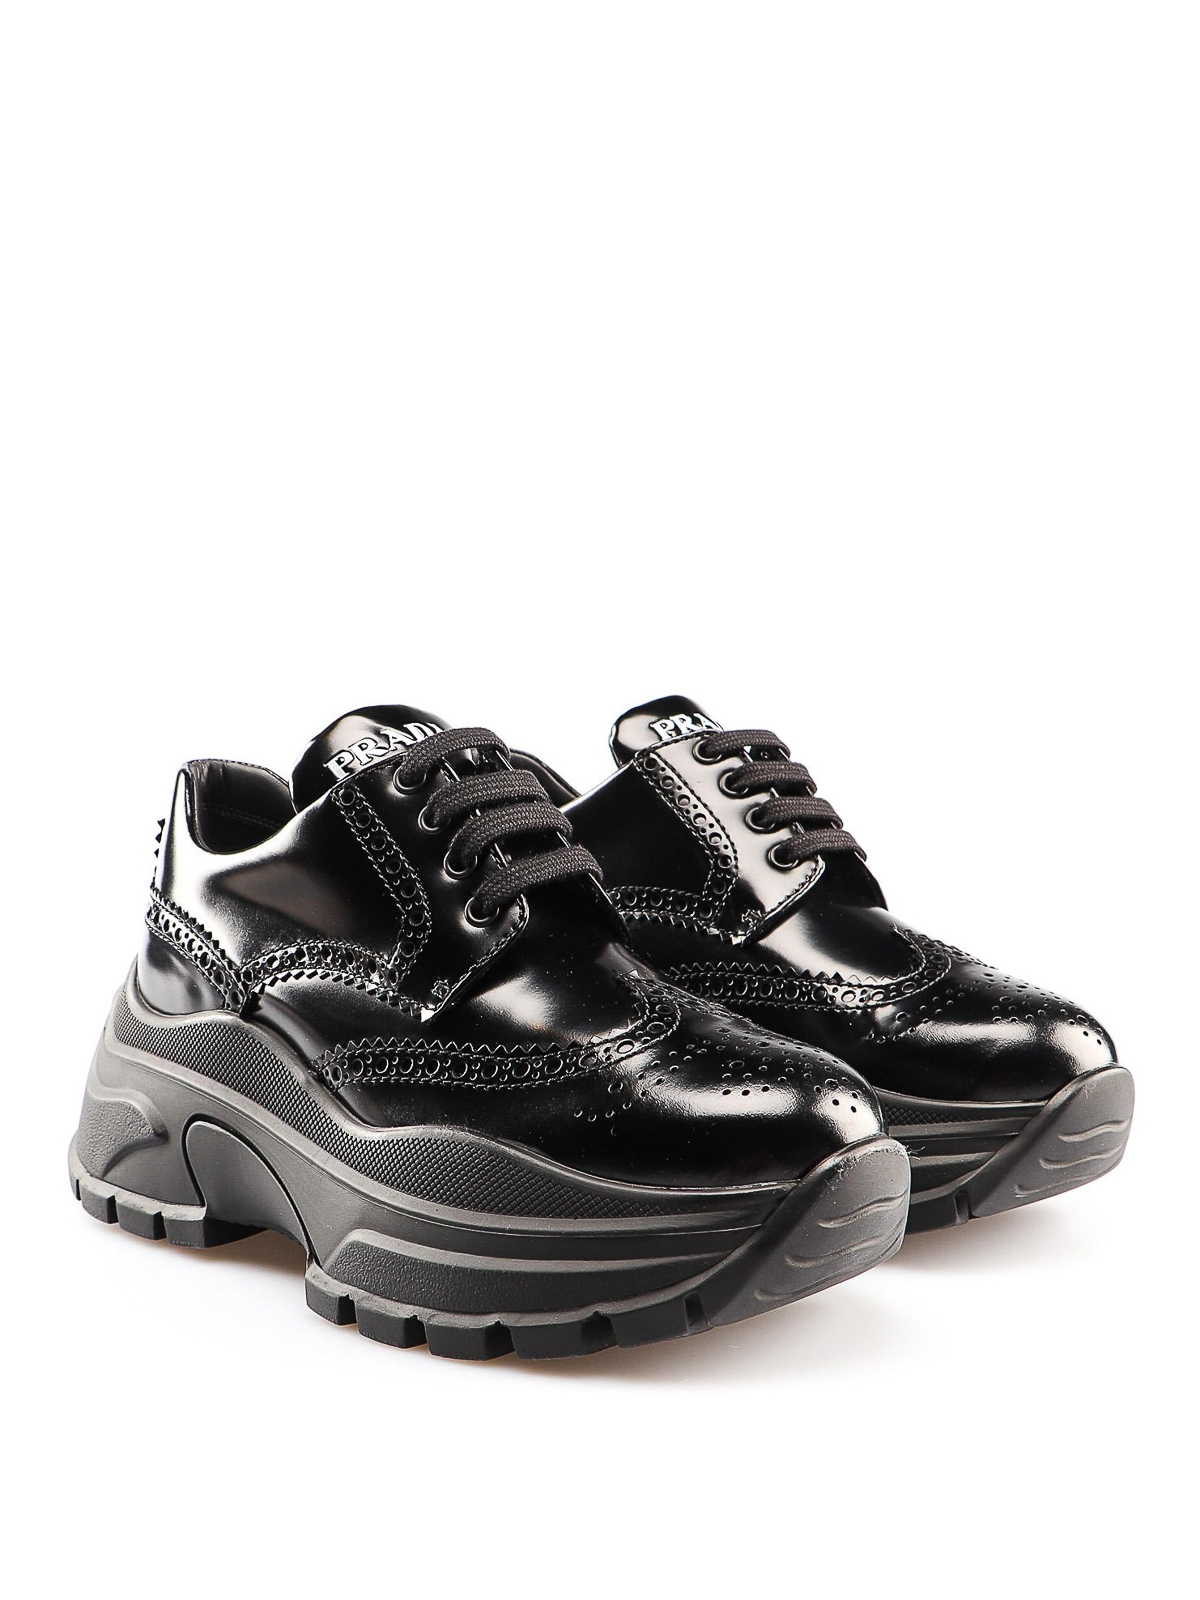 Prada - Black leather platform sneakers 